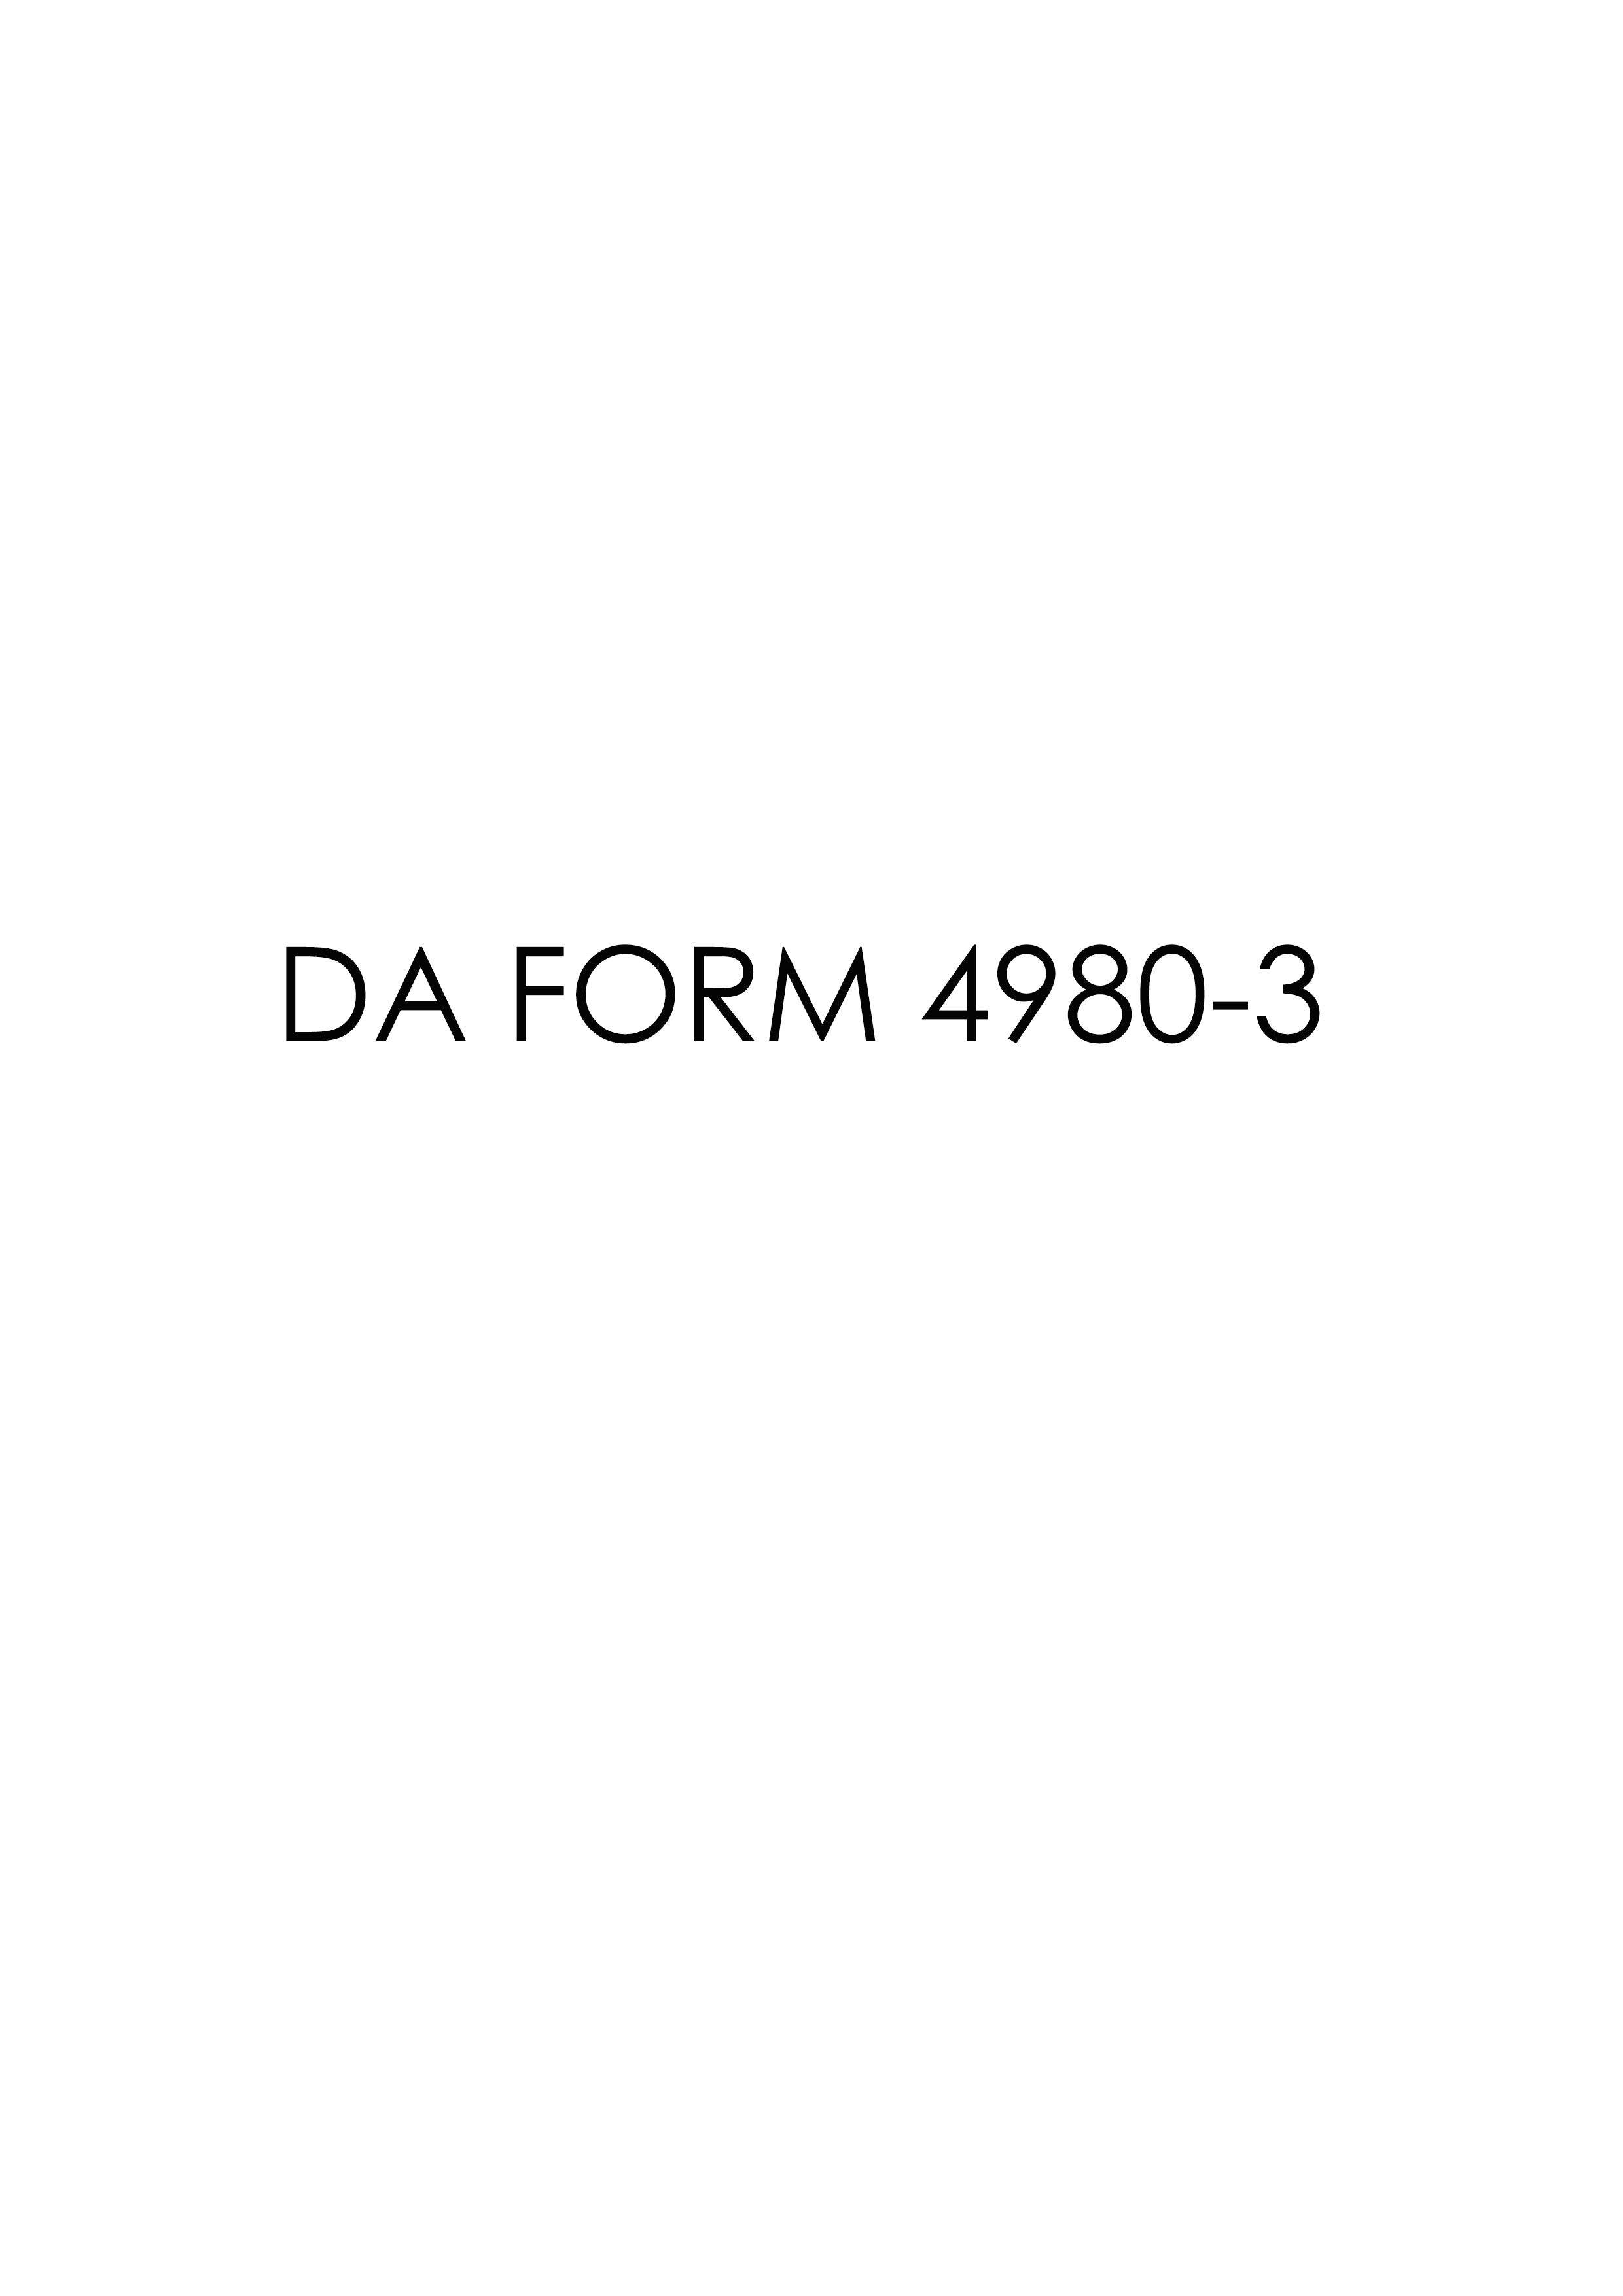 da Form 4980-3 fillable